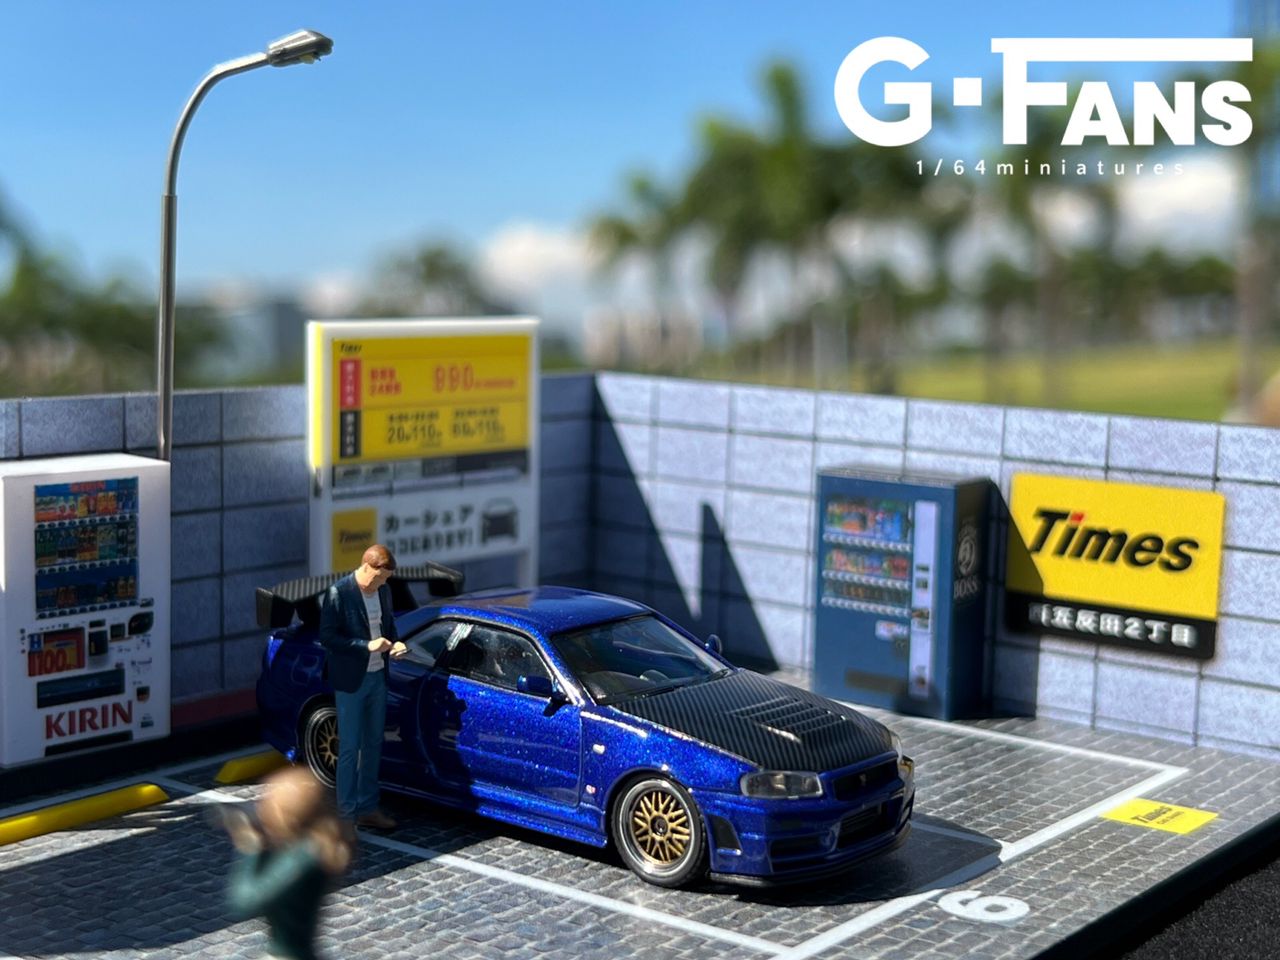 New Arrival 1:64 G-Fans Street Parking Diorama Ver. 2